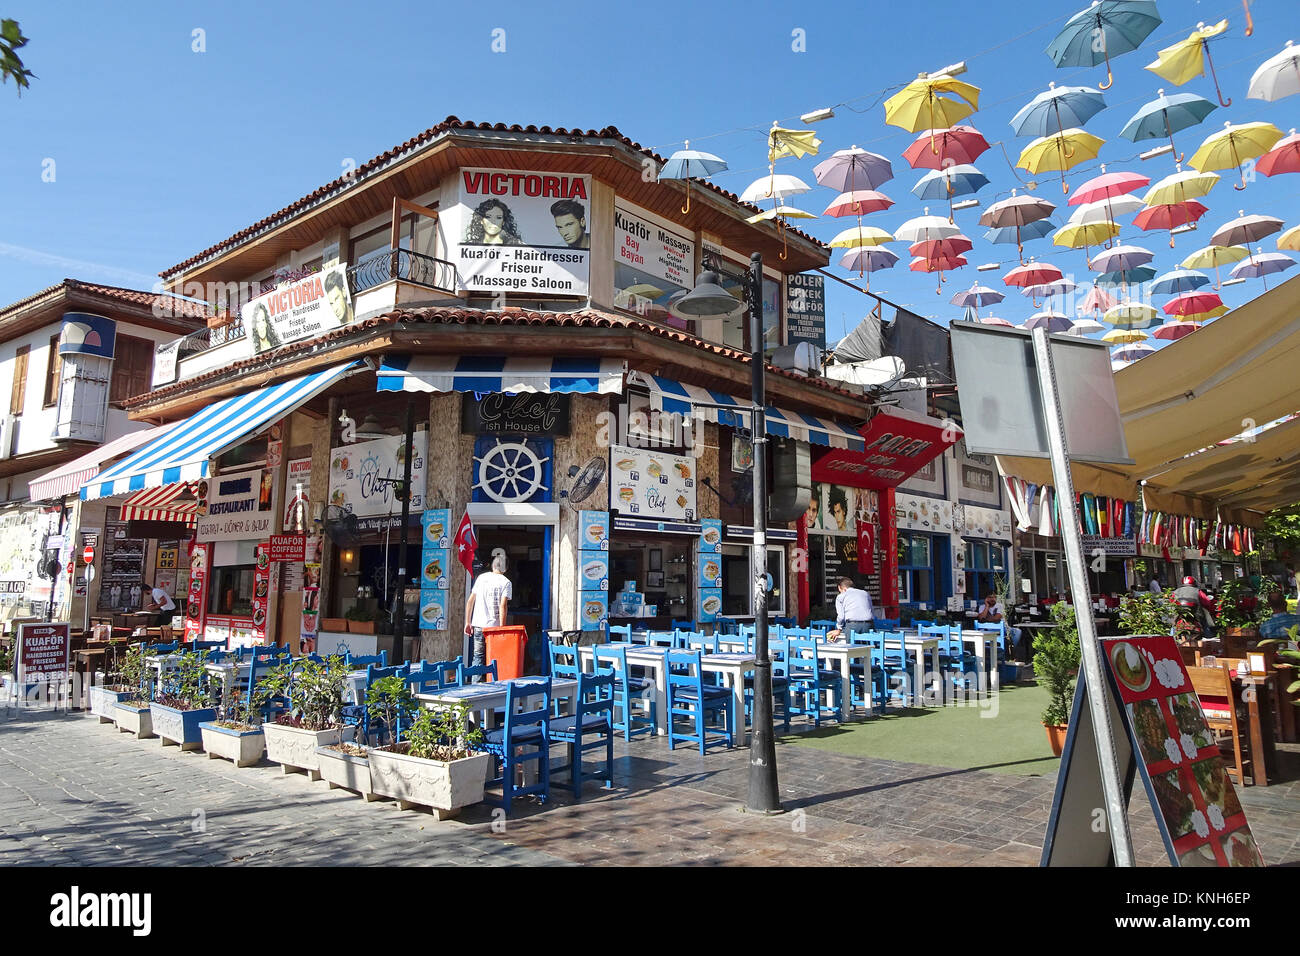 Gastronomia a ombrello street, 2.Inoenue Sokak, Kaleici, antica di Antalya, riviera turca, Turchia Foto Stock